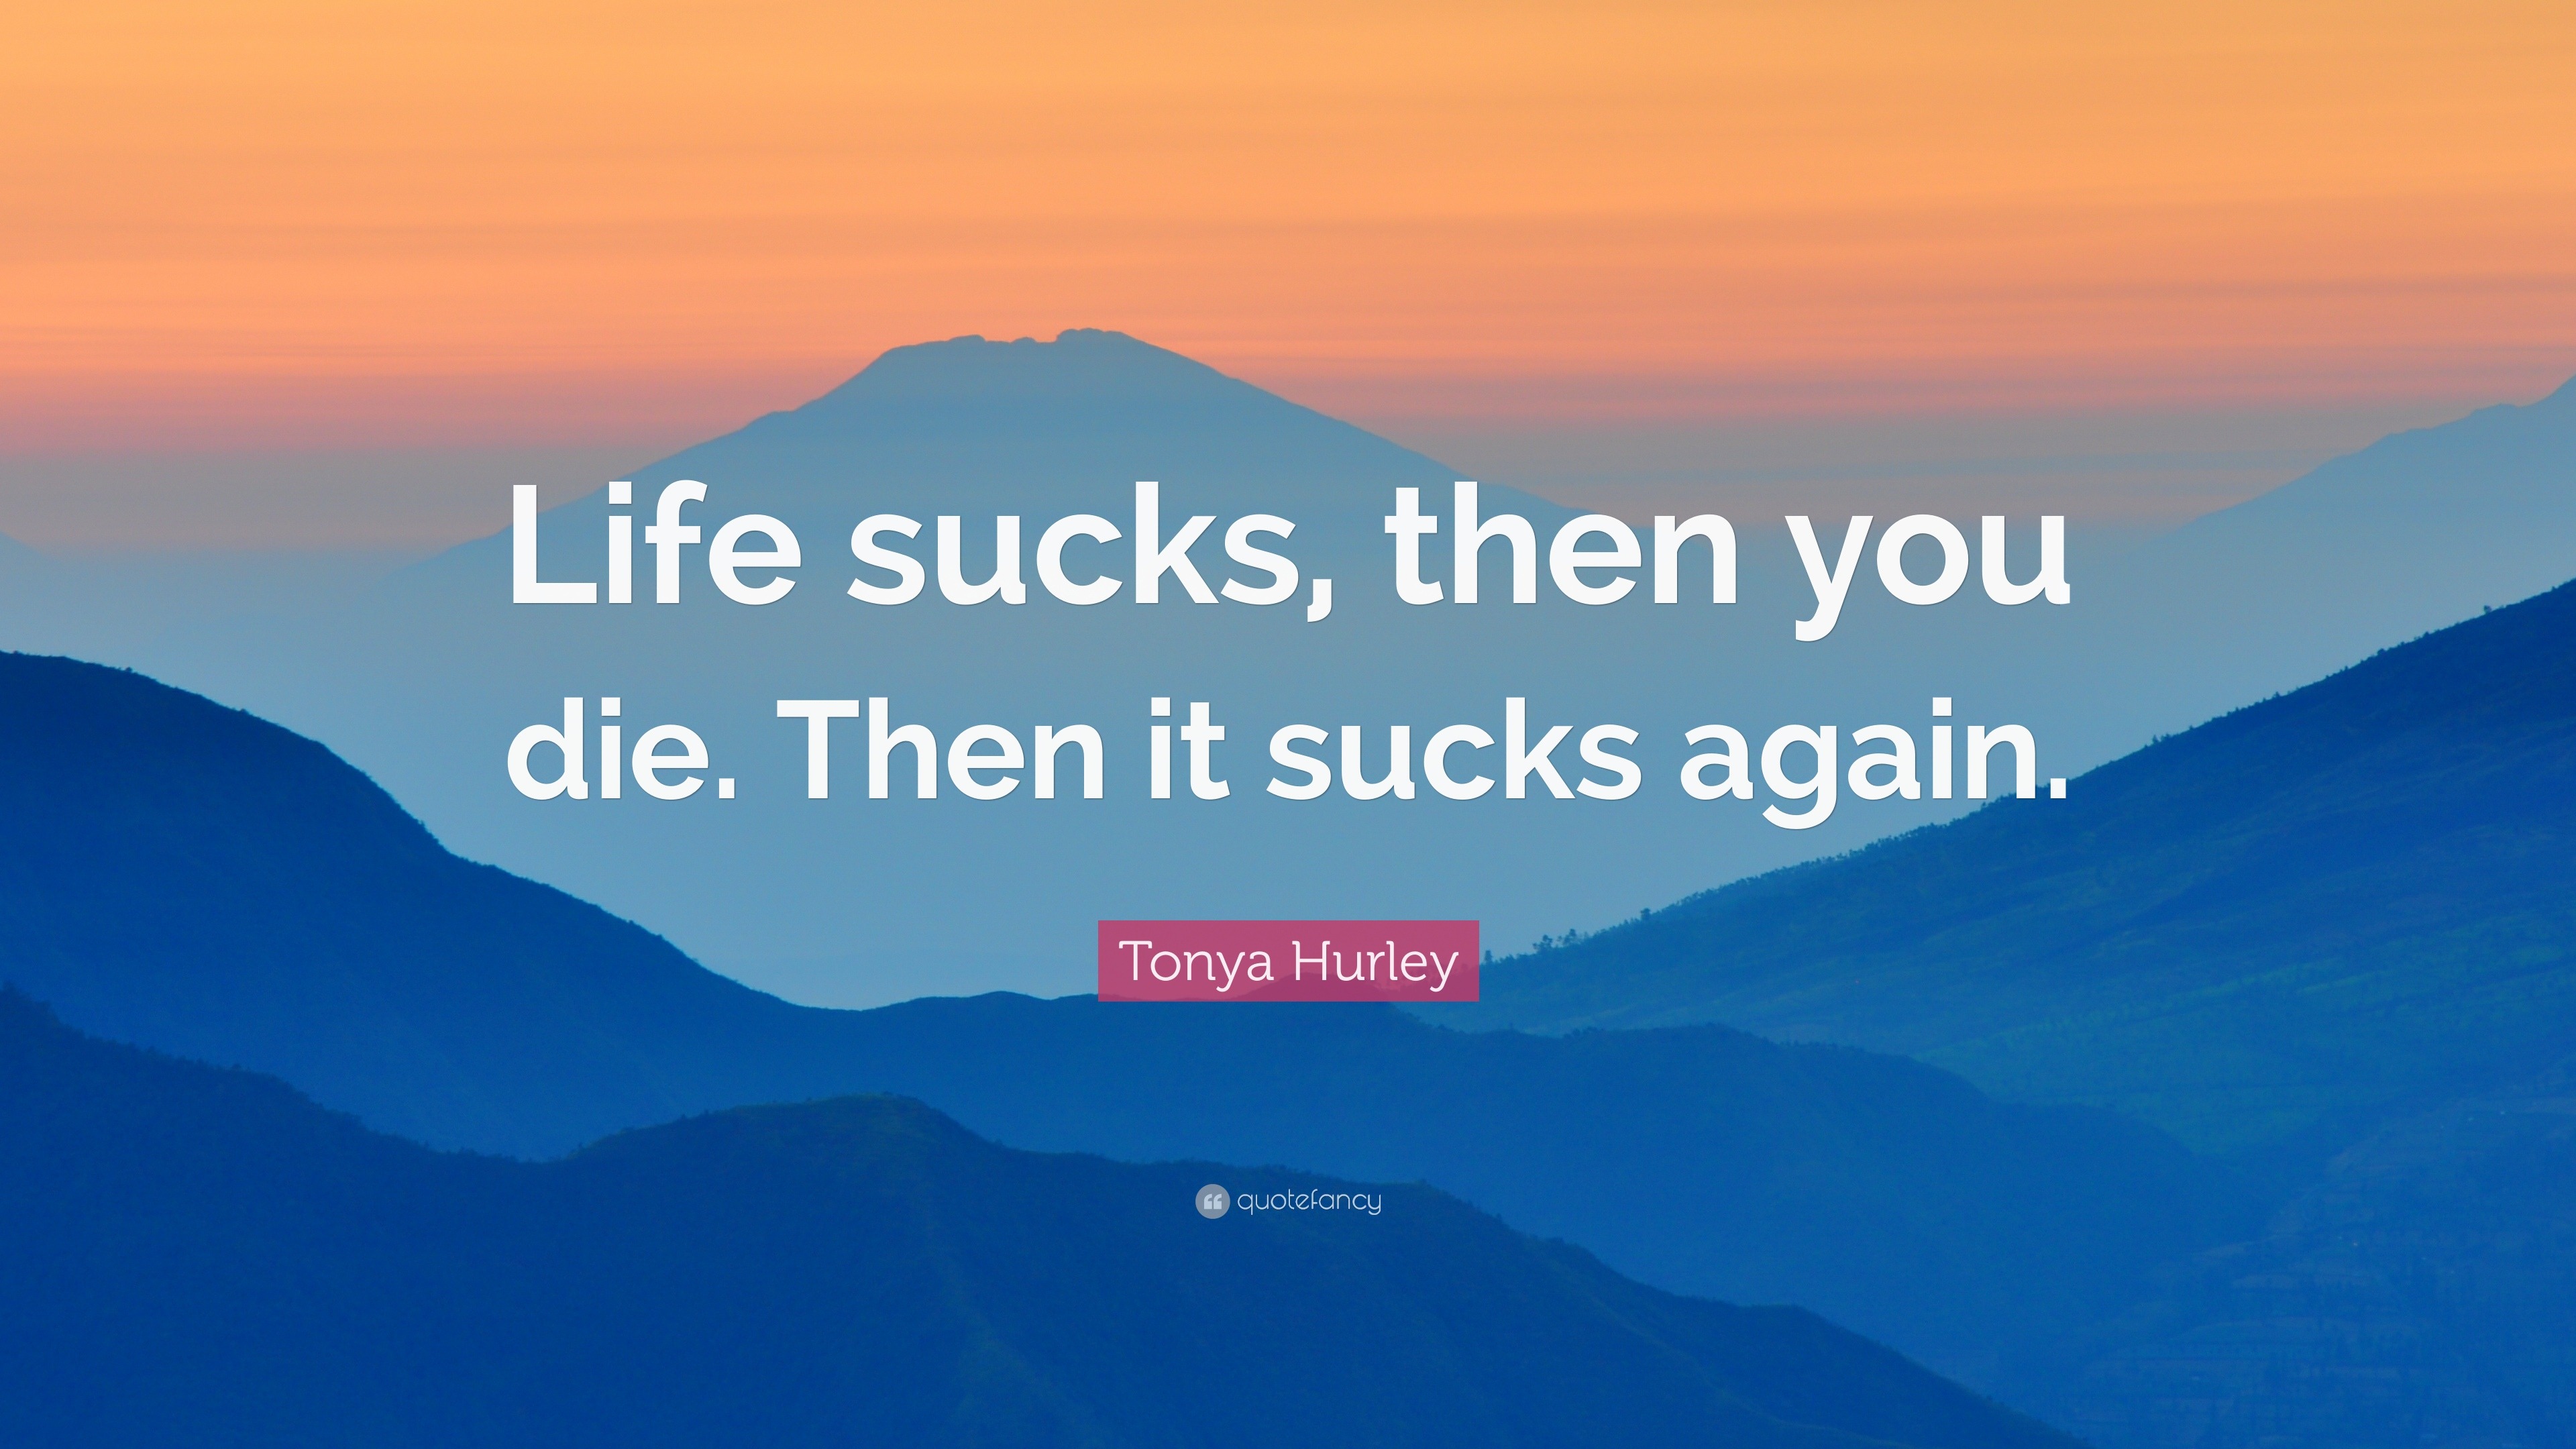 375913-Tonya-Hurley-Quote-Life-sucks-then-you-die-Then-it-sucks-again.jpg